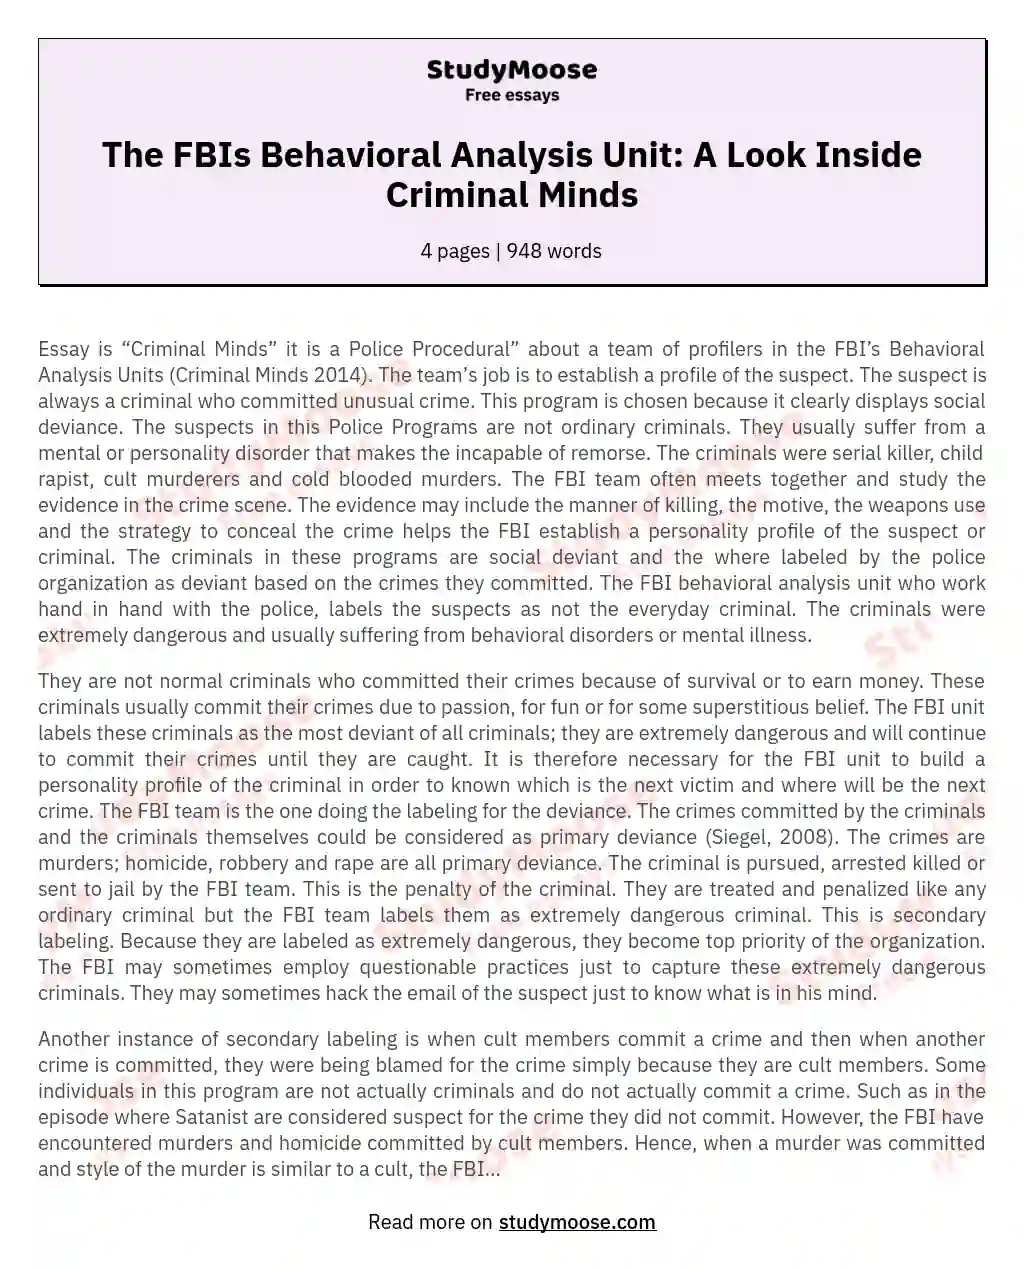 The FBIs Behavioral Analysis Unit: A Look Inside Criminal Minds essay